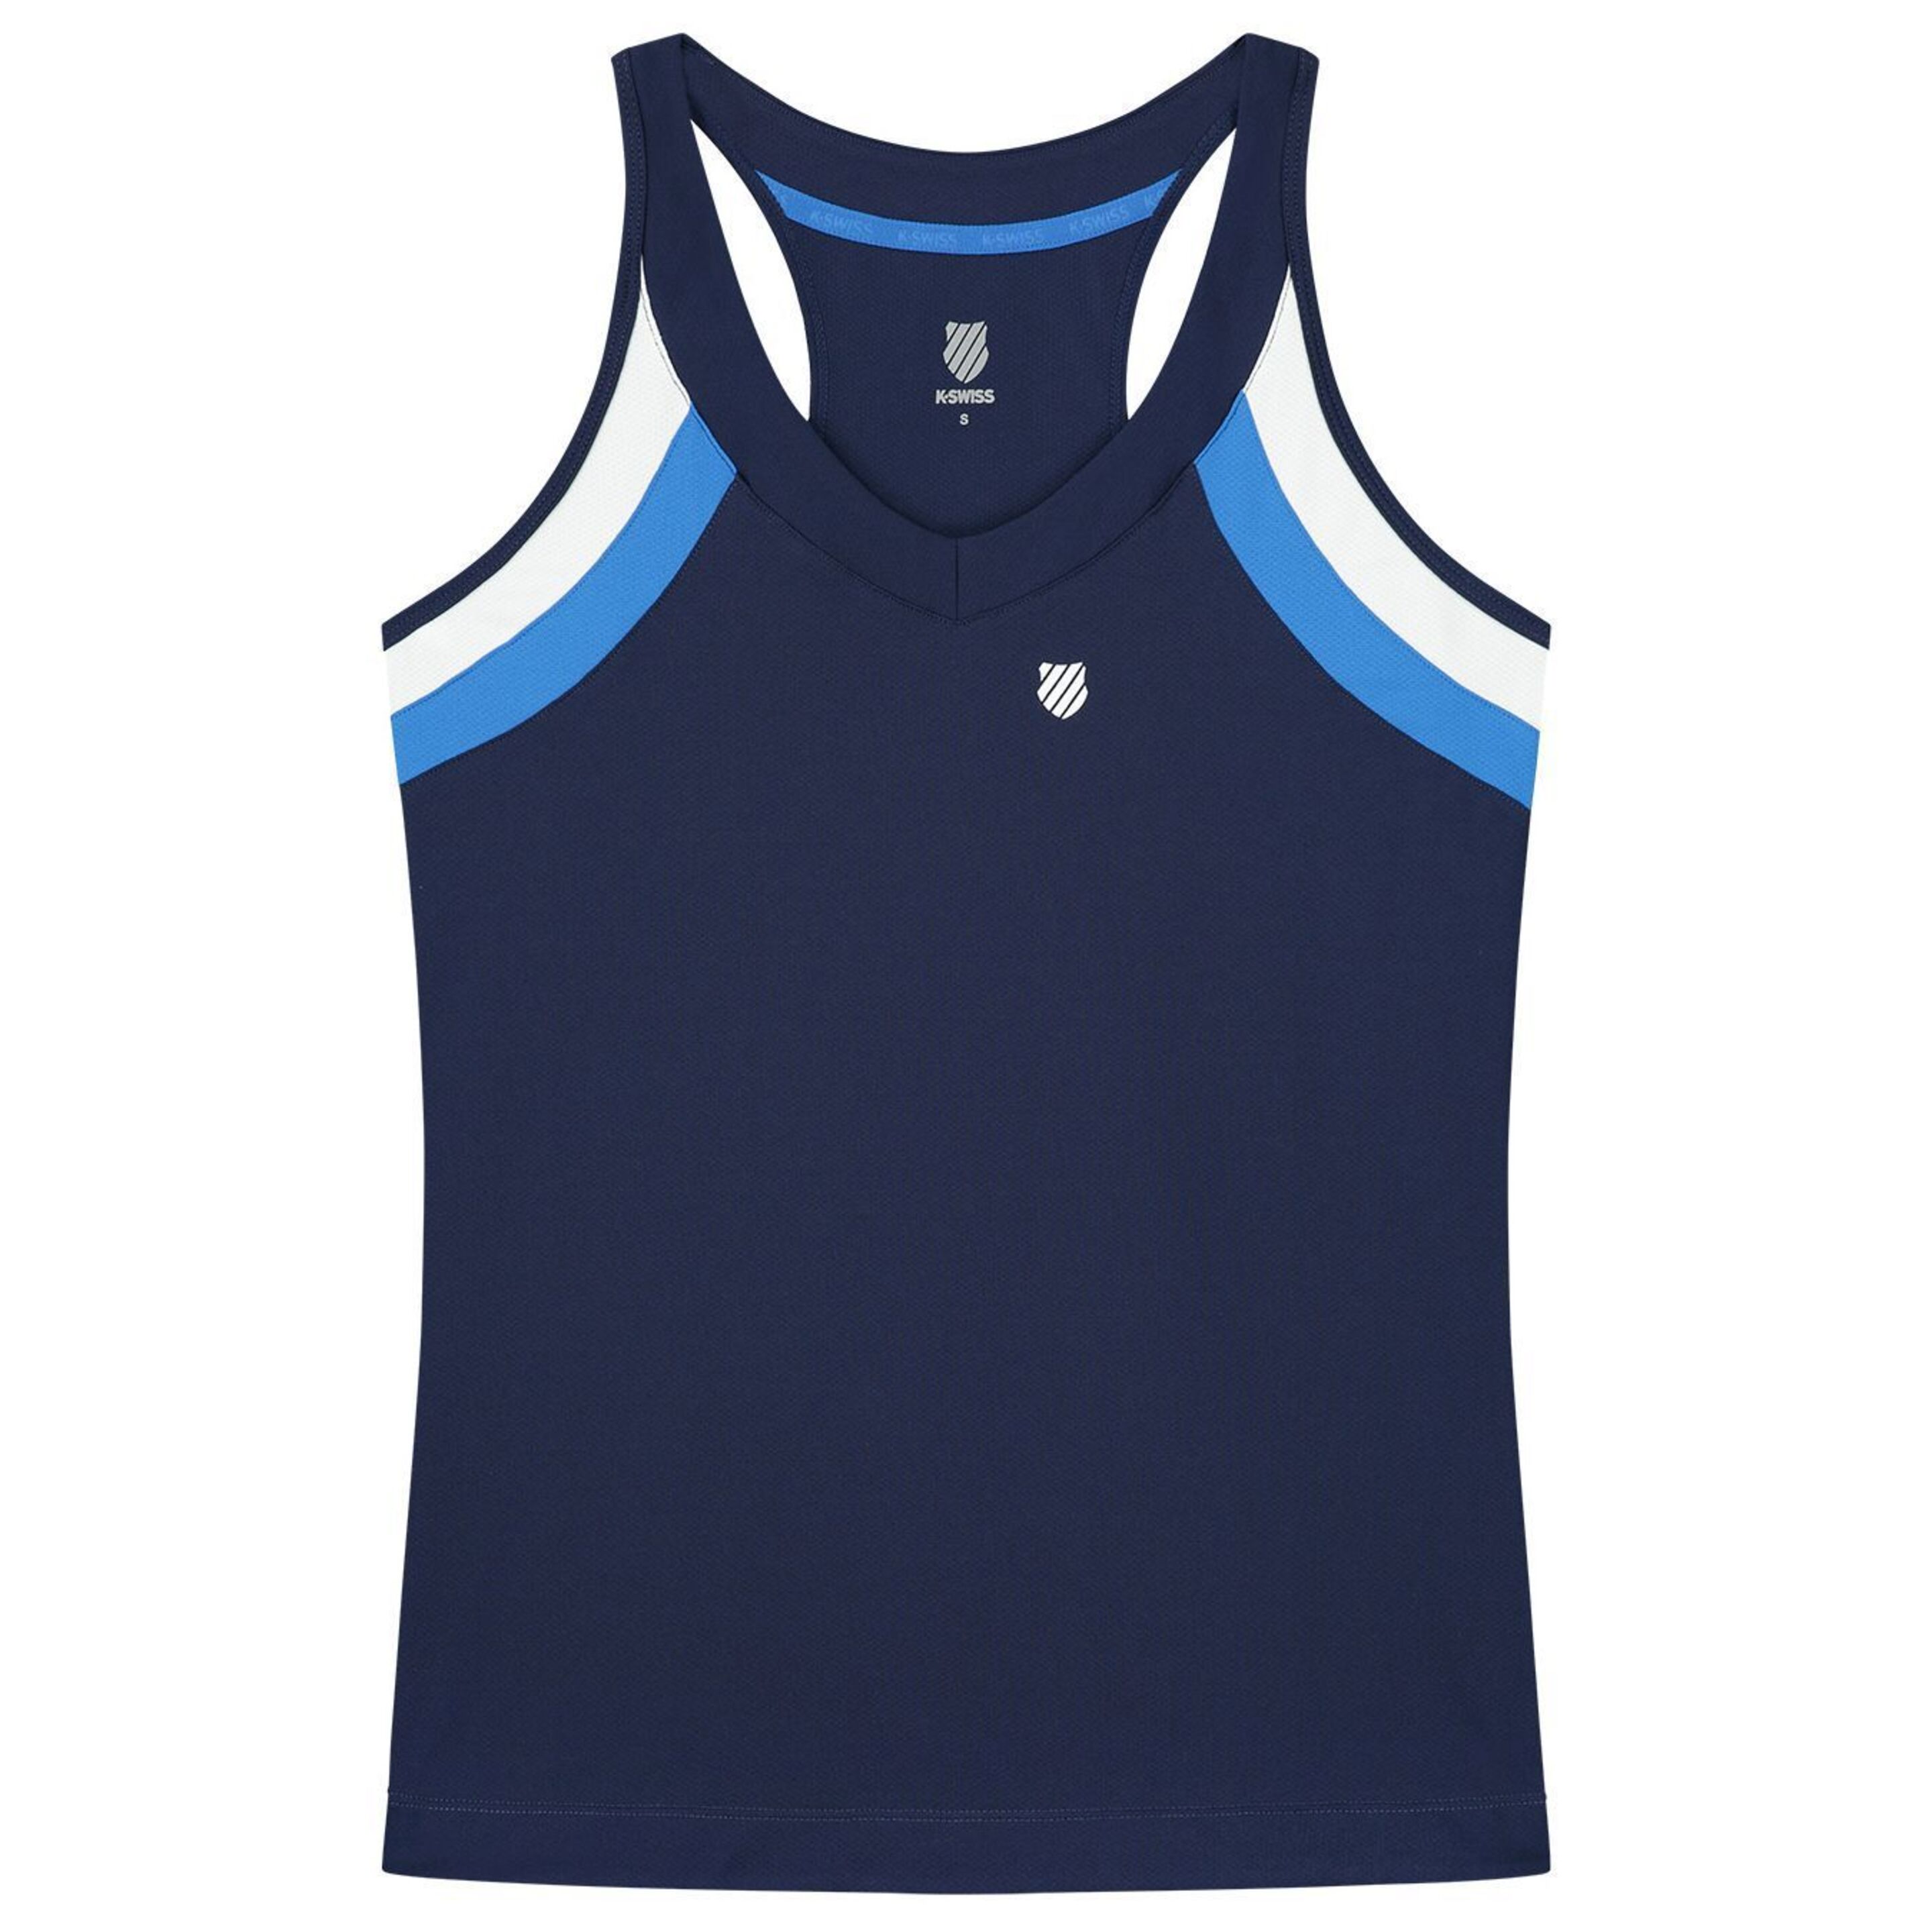 Camiseta De Tenis Y Pádel K-swiss Tirantes Core Team - azul-marino - 